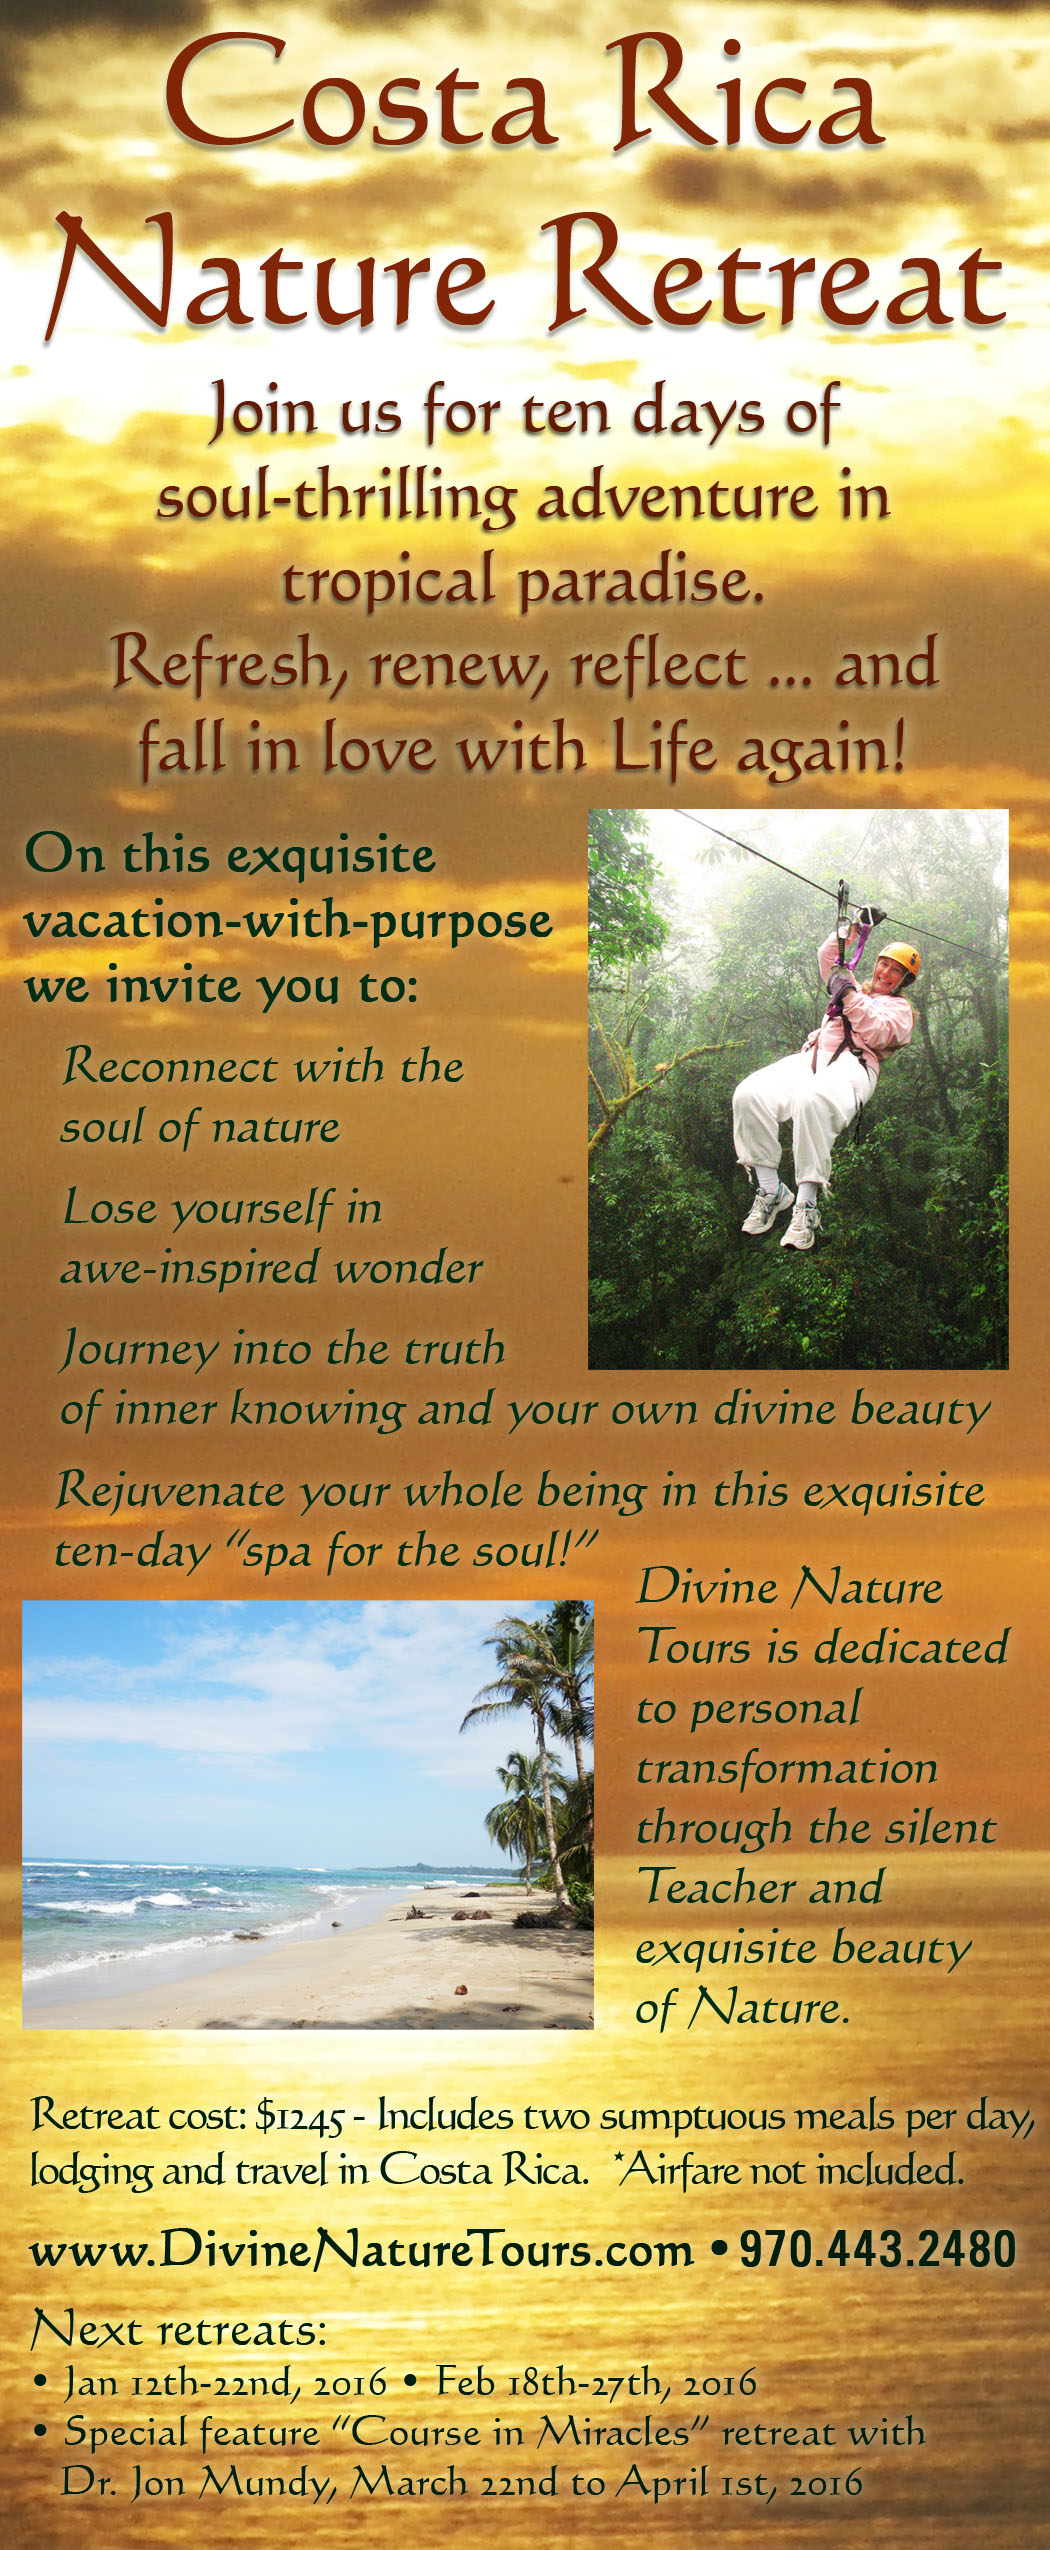 Divine Nature Tours